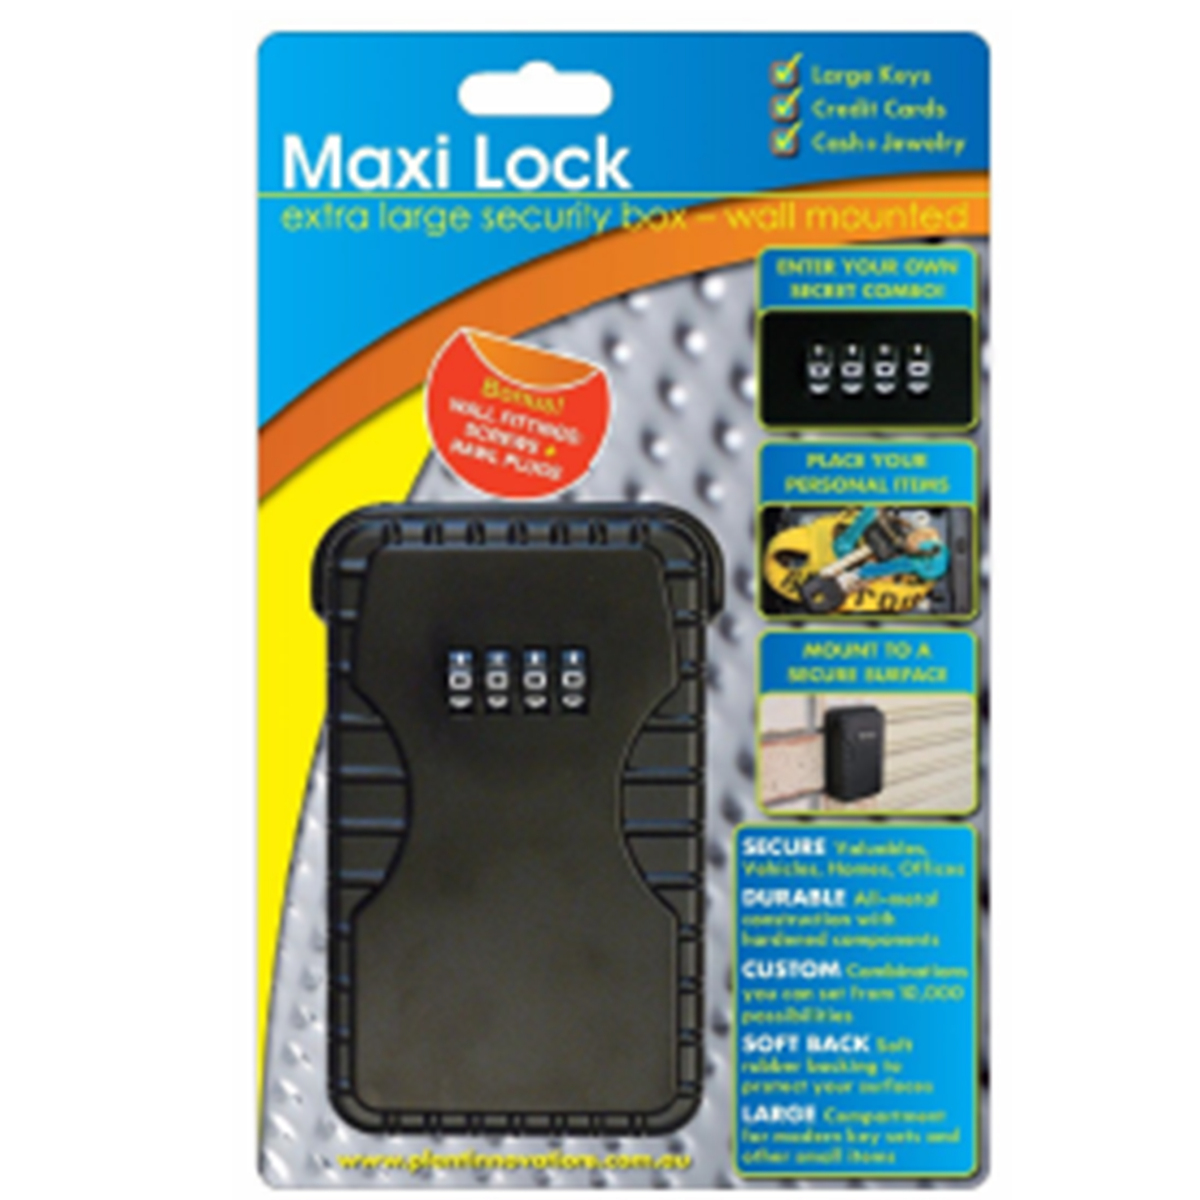 Maxi Lock security box wall mounted